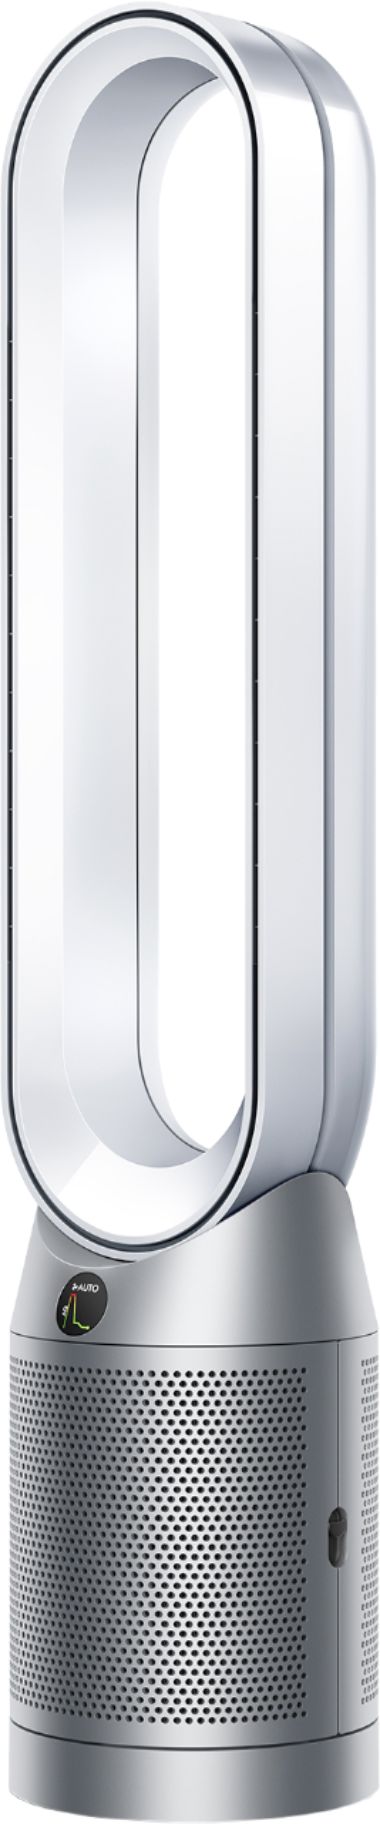 Dyson Purifier Cool TP07 Smart Air Purifier and Fan White/Silver 